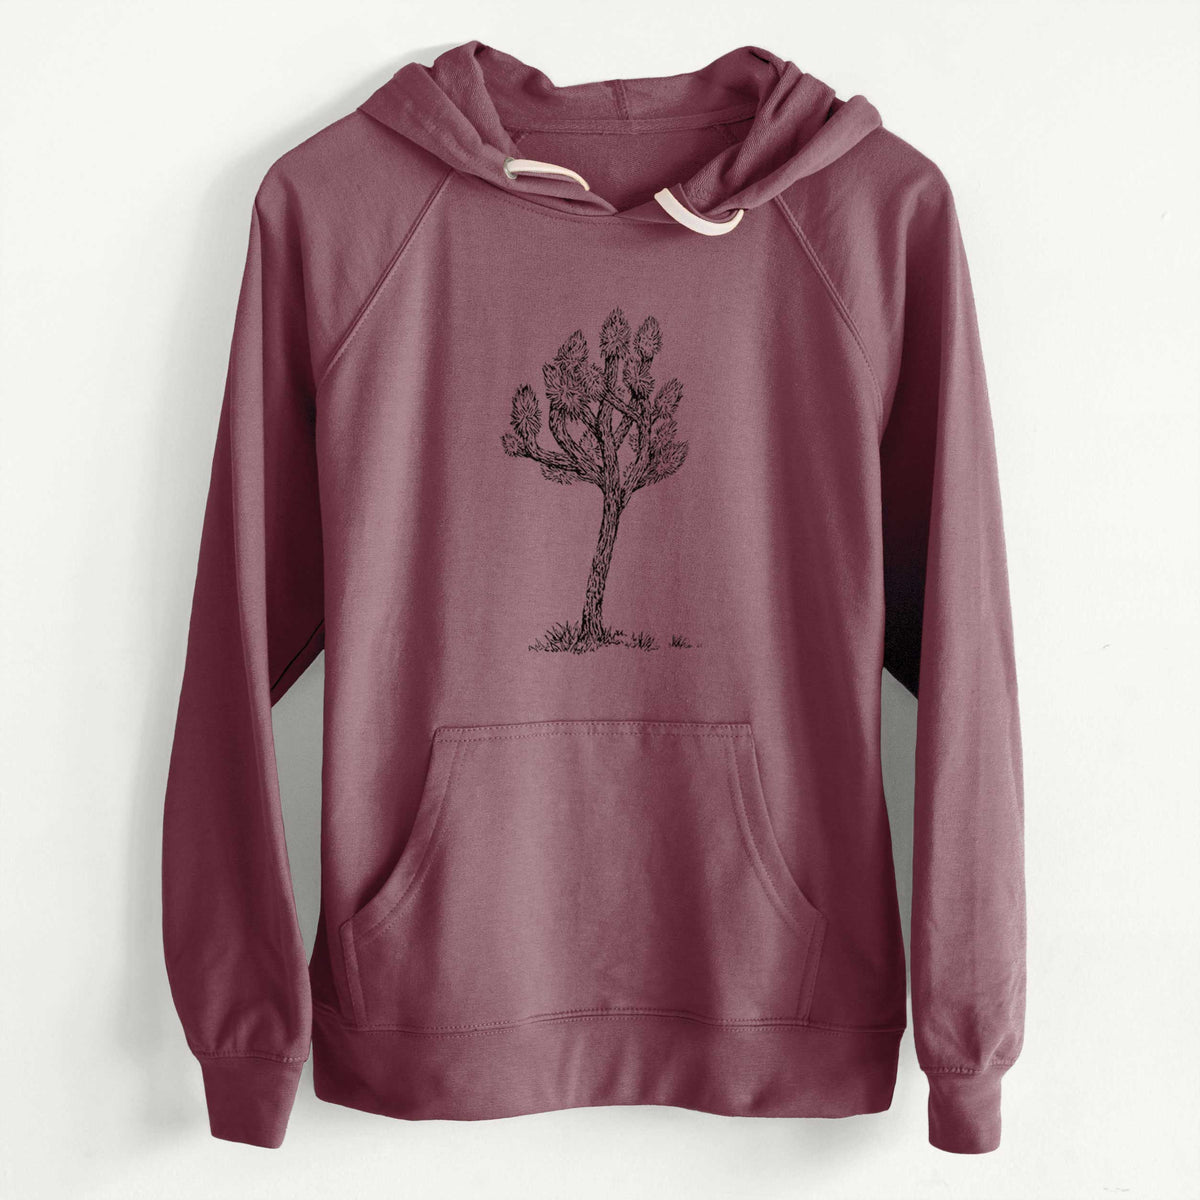 Yucca brevifolia - Joshua Tree  - Slim Fit Loopback Terry Hoodie